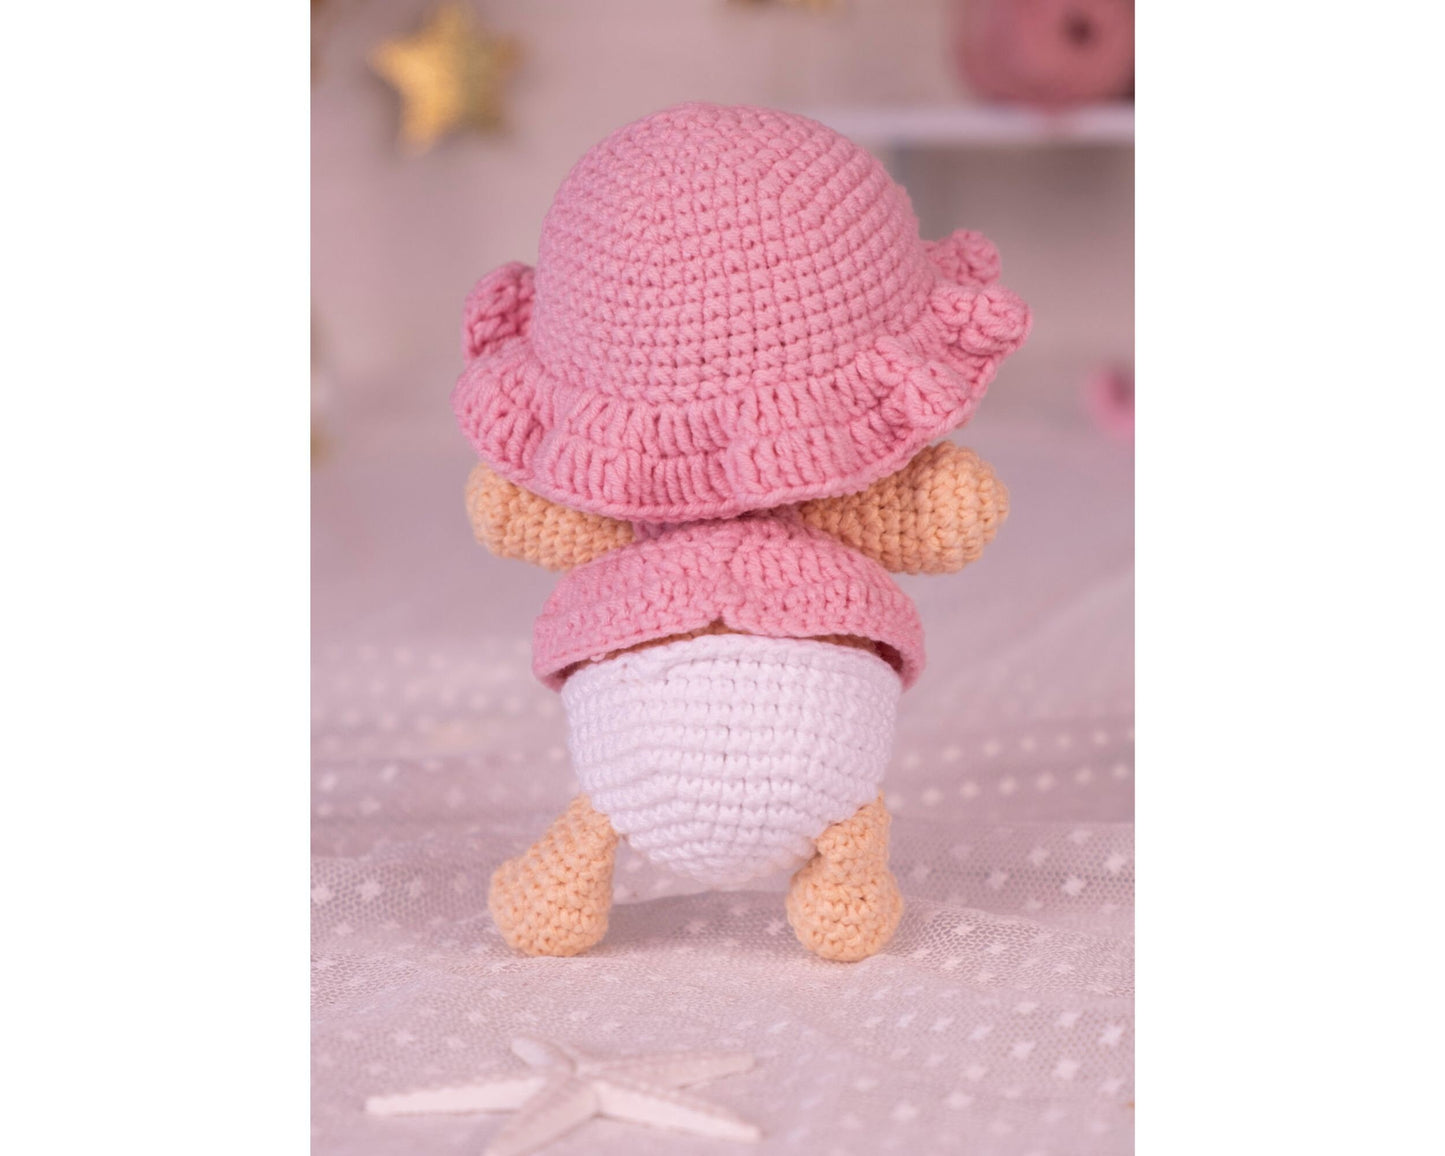 Crochet Baby Doll, Baby Boy Doll, Baby Girl Doll, Handmade Baby Doll, Knit Baby Doll, Baby Crochet Doll, Newborn Baby Doll, Baby Shower Gift